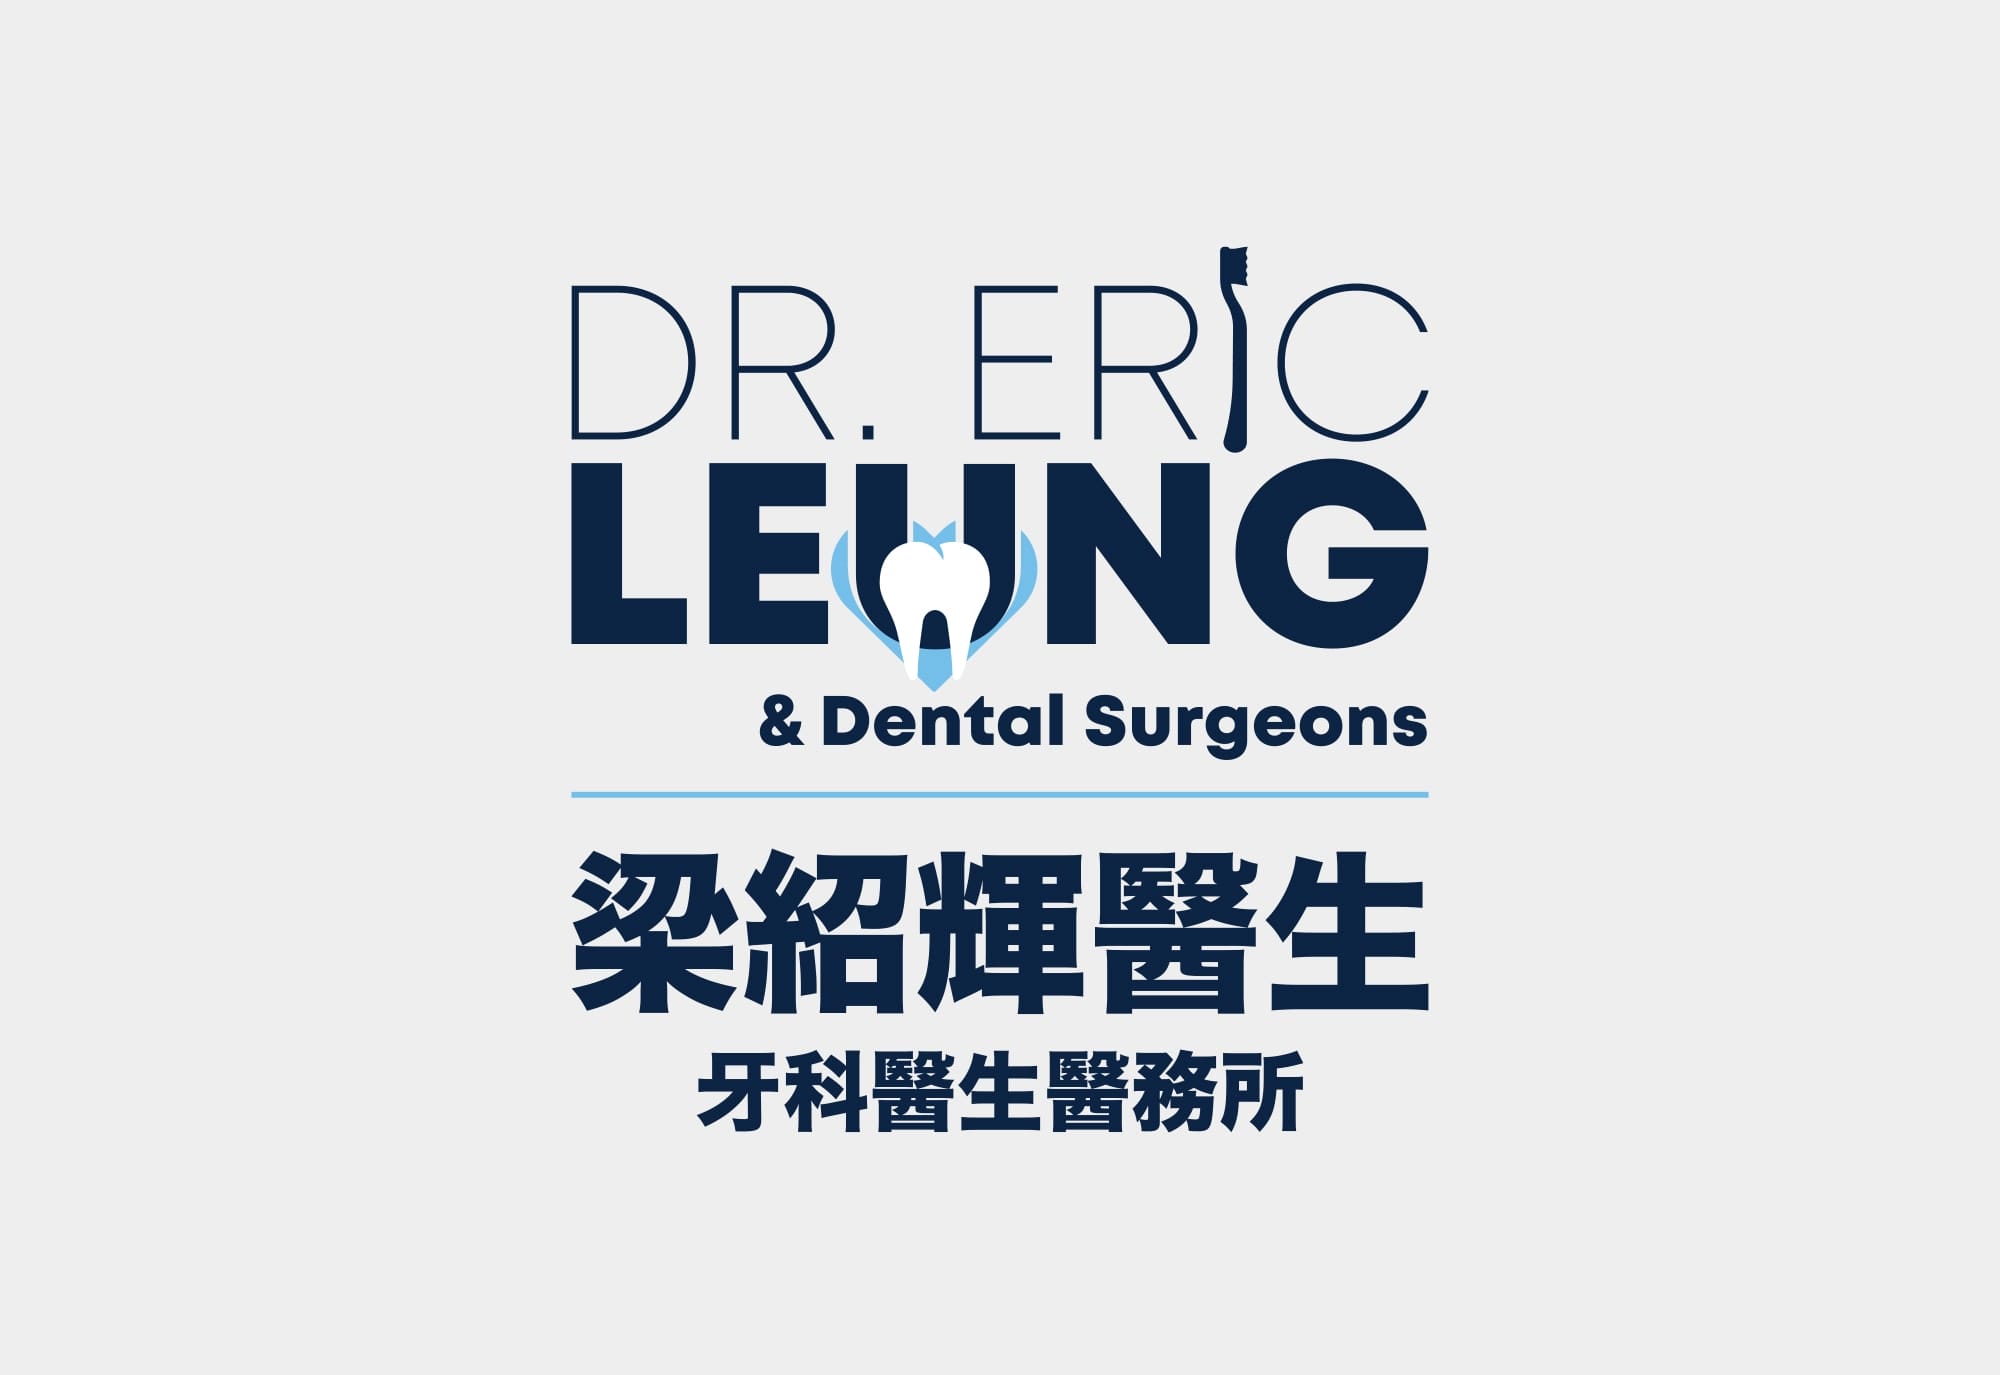 Brand development for a dental practice in Hong Kong